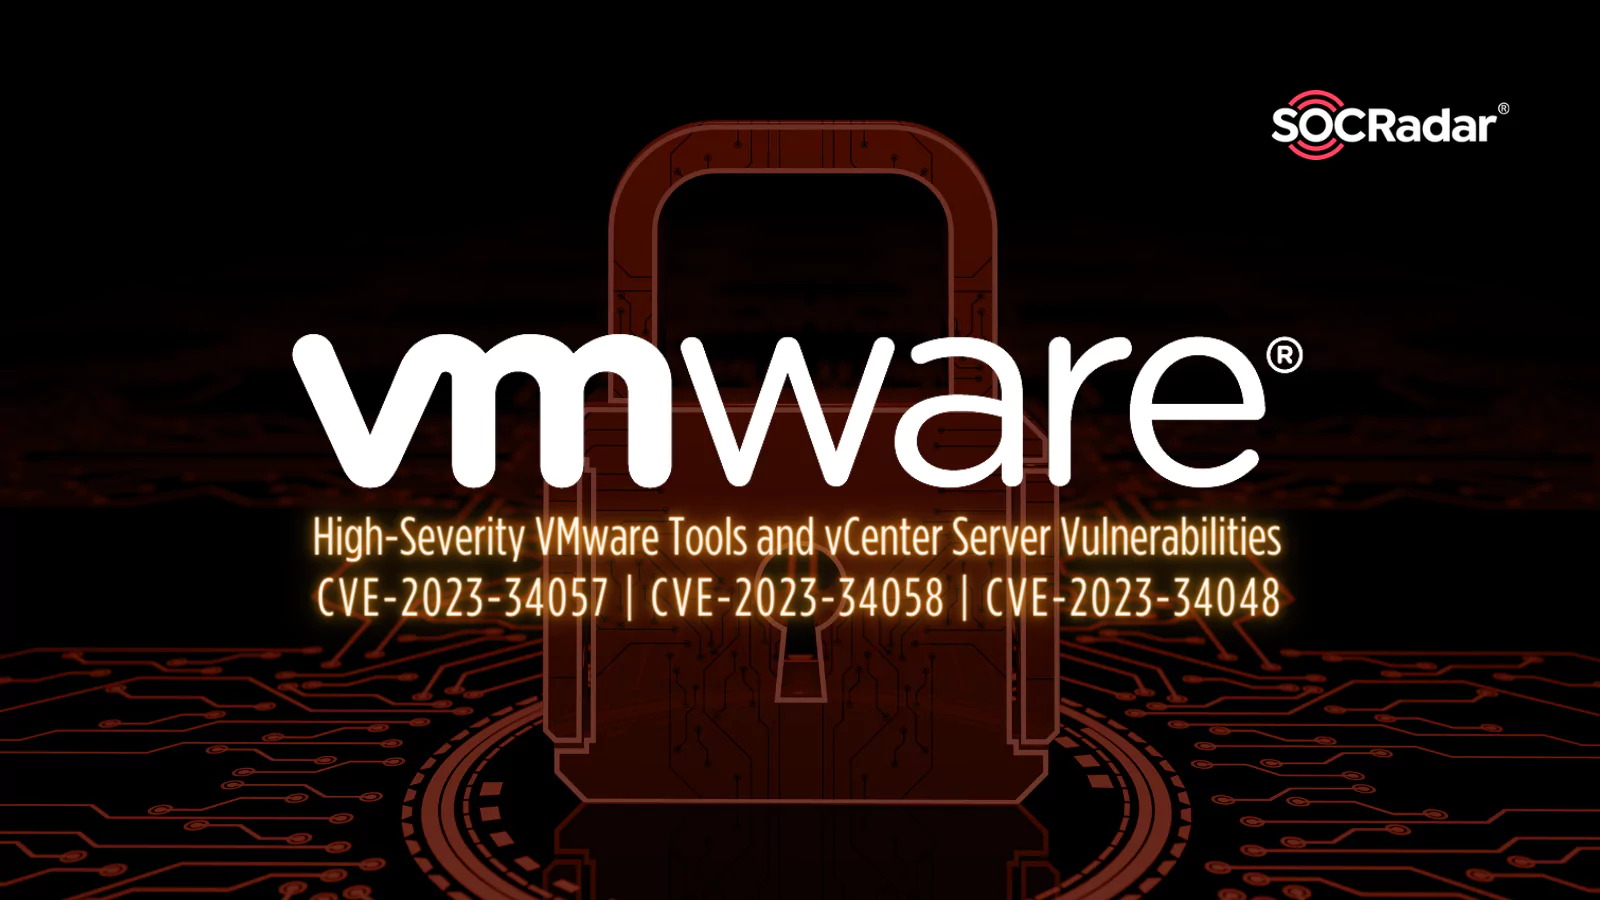 SOCRadar® Cyber Intelligence Inc. | High-Severity VMware Tools and vCenter Server Vulnerabilities Addressed with Recent Patches (CVE-2023-34057, CVE-2023-34058, CVE-2023-34048) 